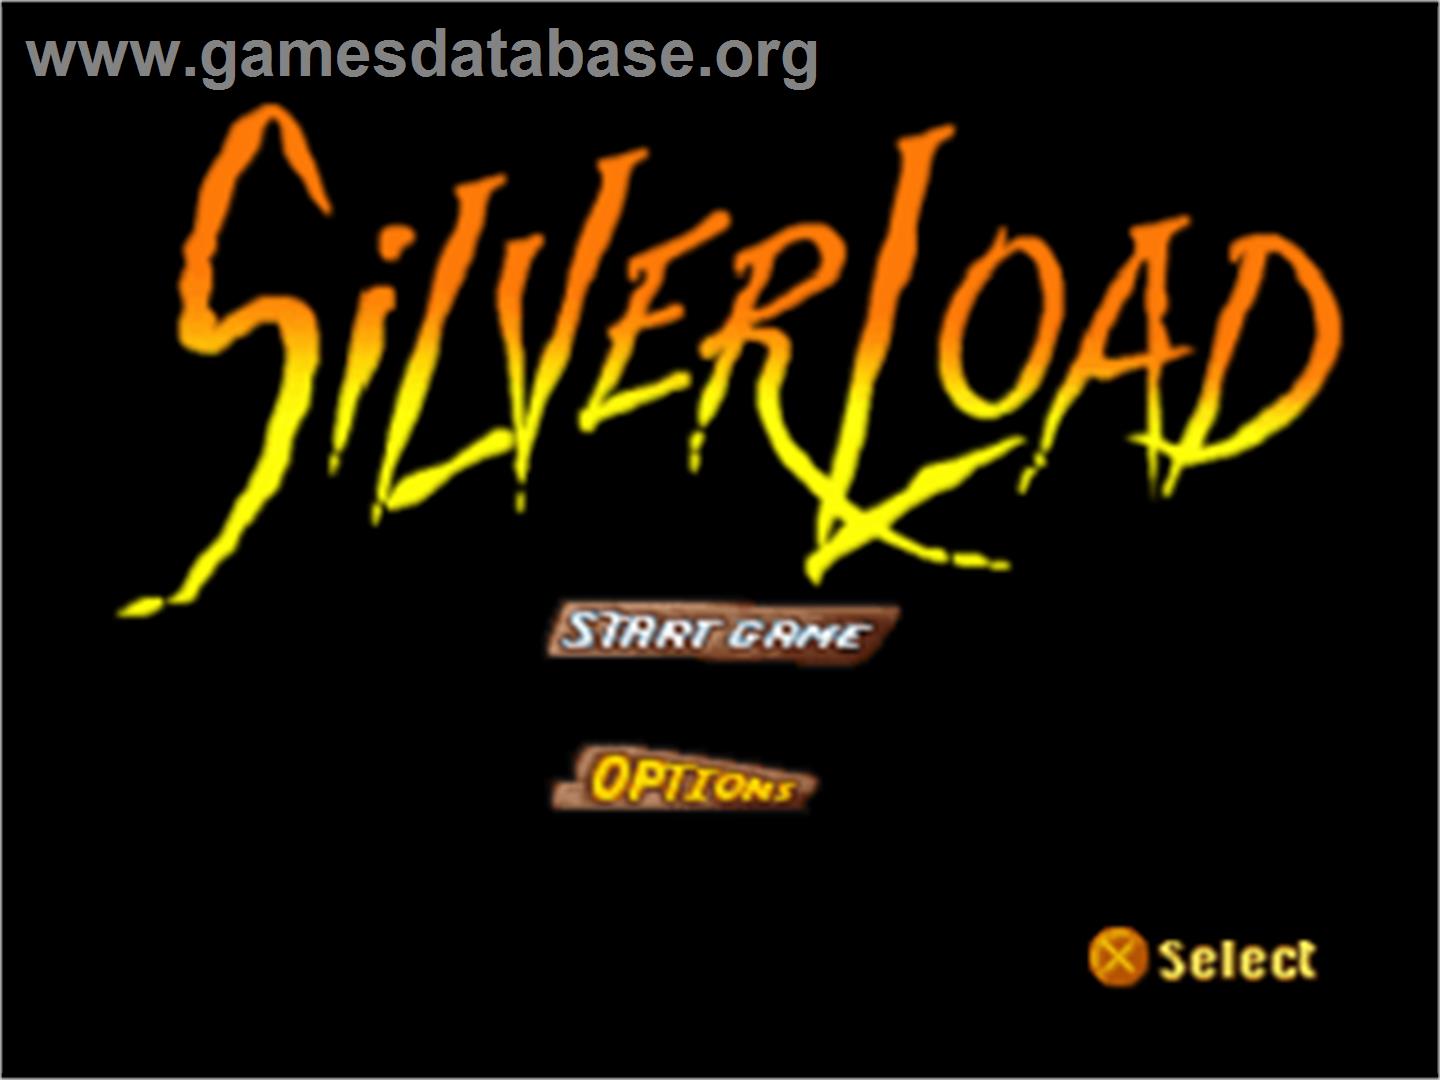 Silverload - Sony Playstation - Artwork - Title Screen